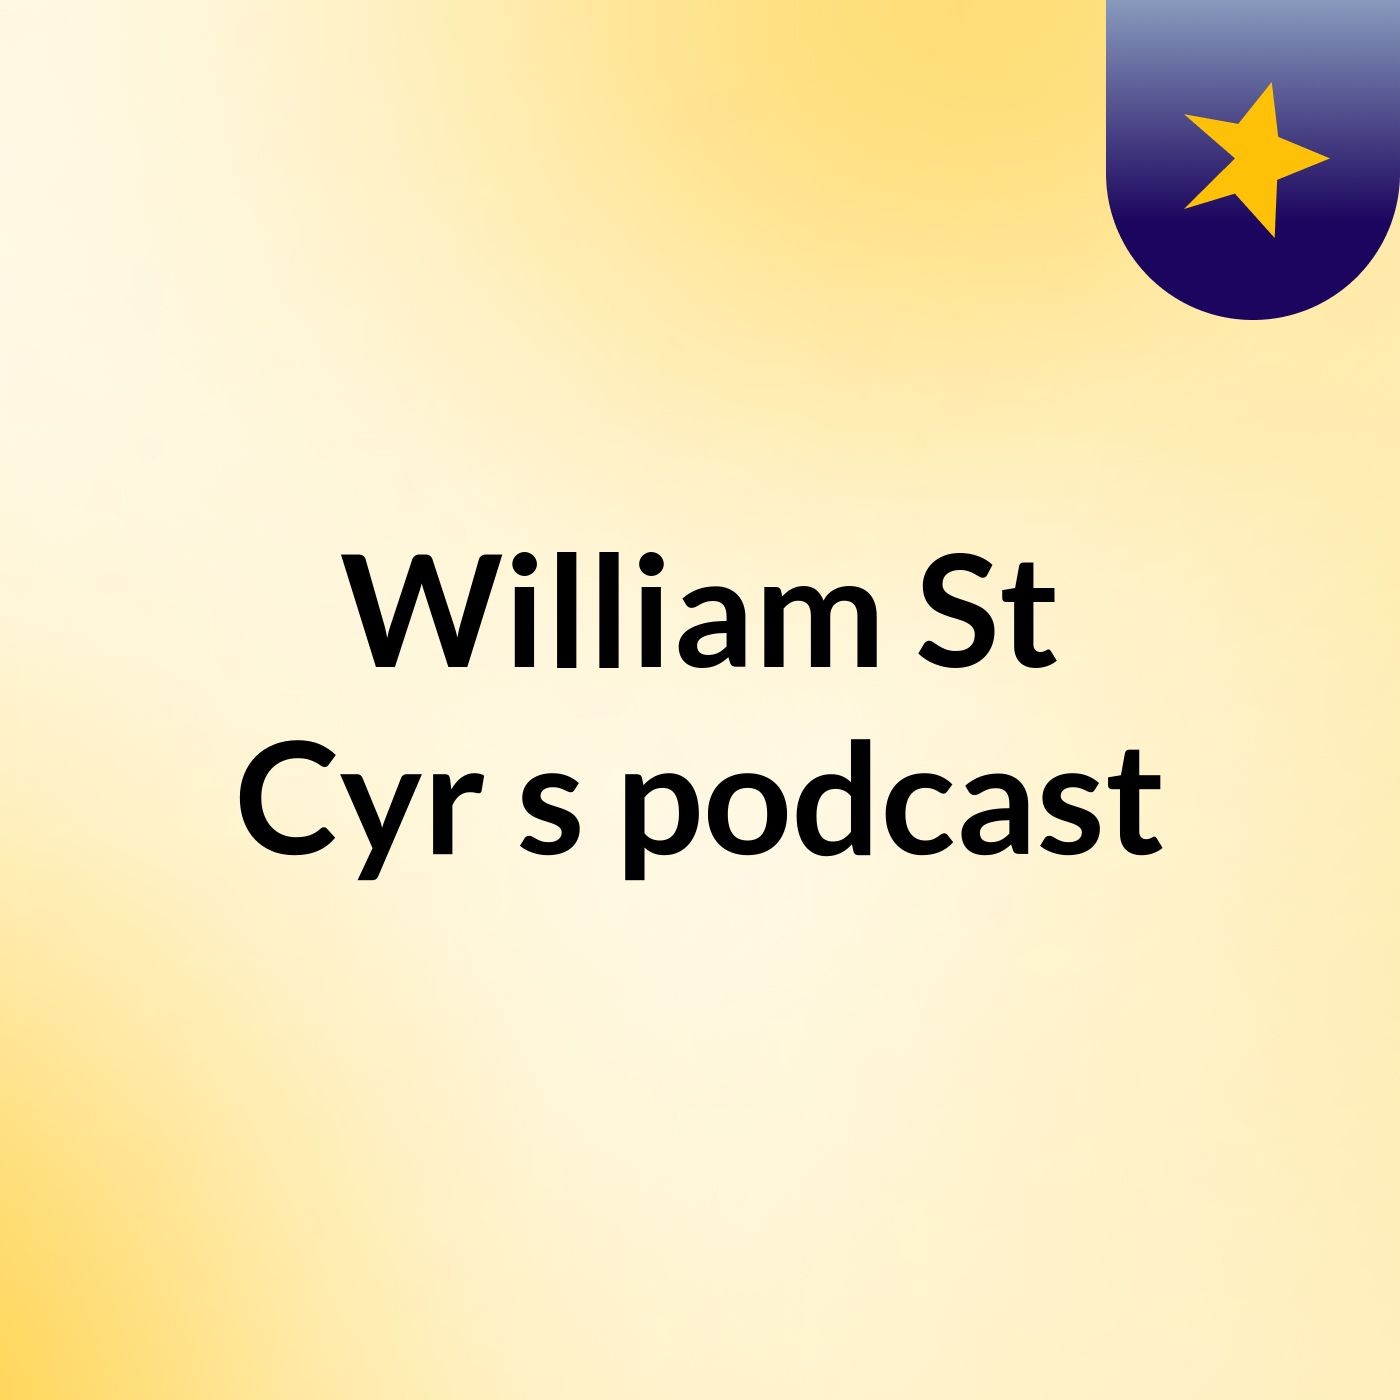 William St Cyr's podcast